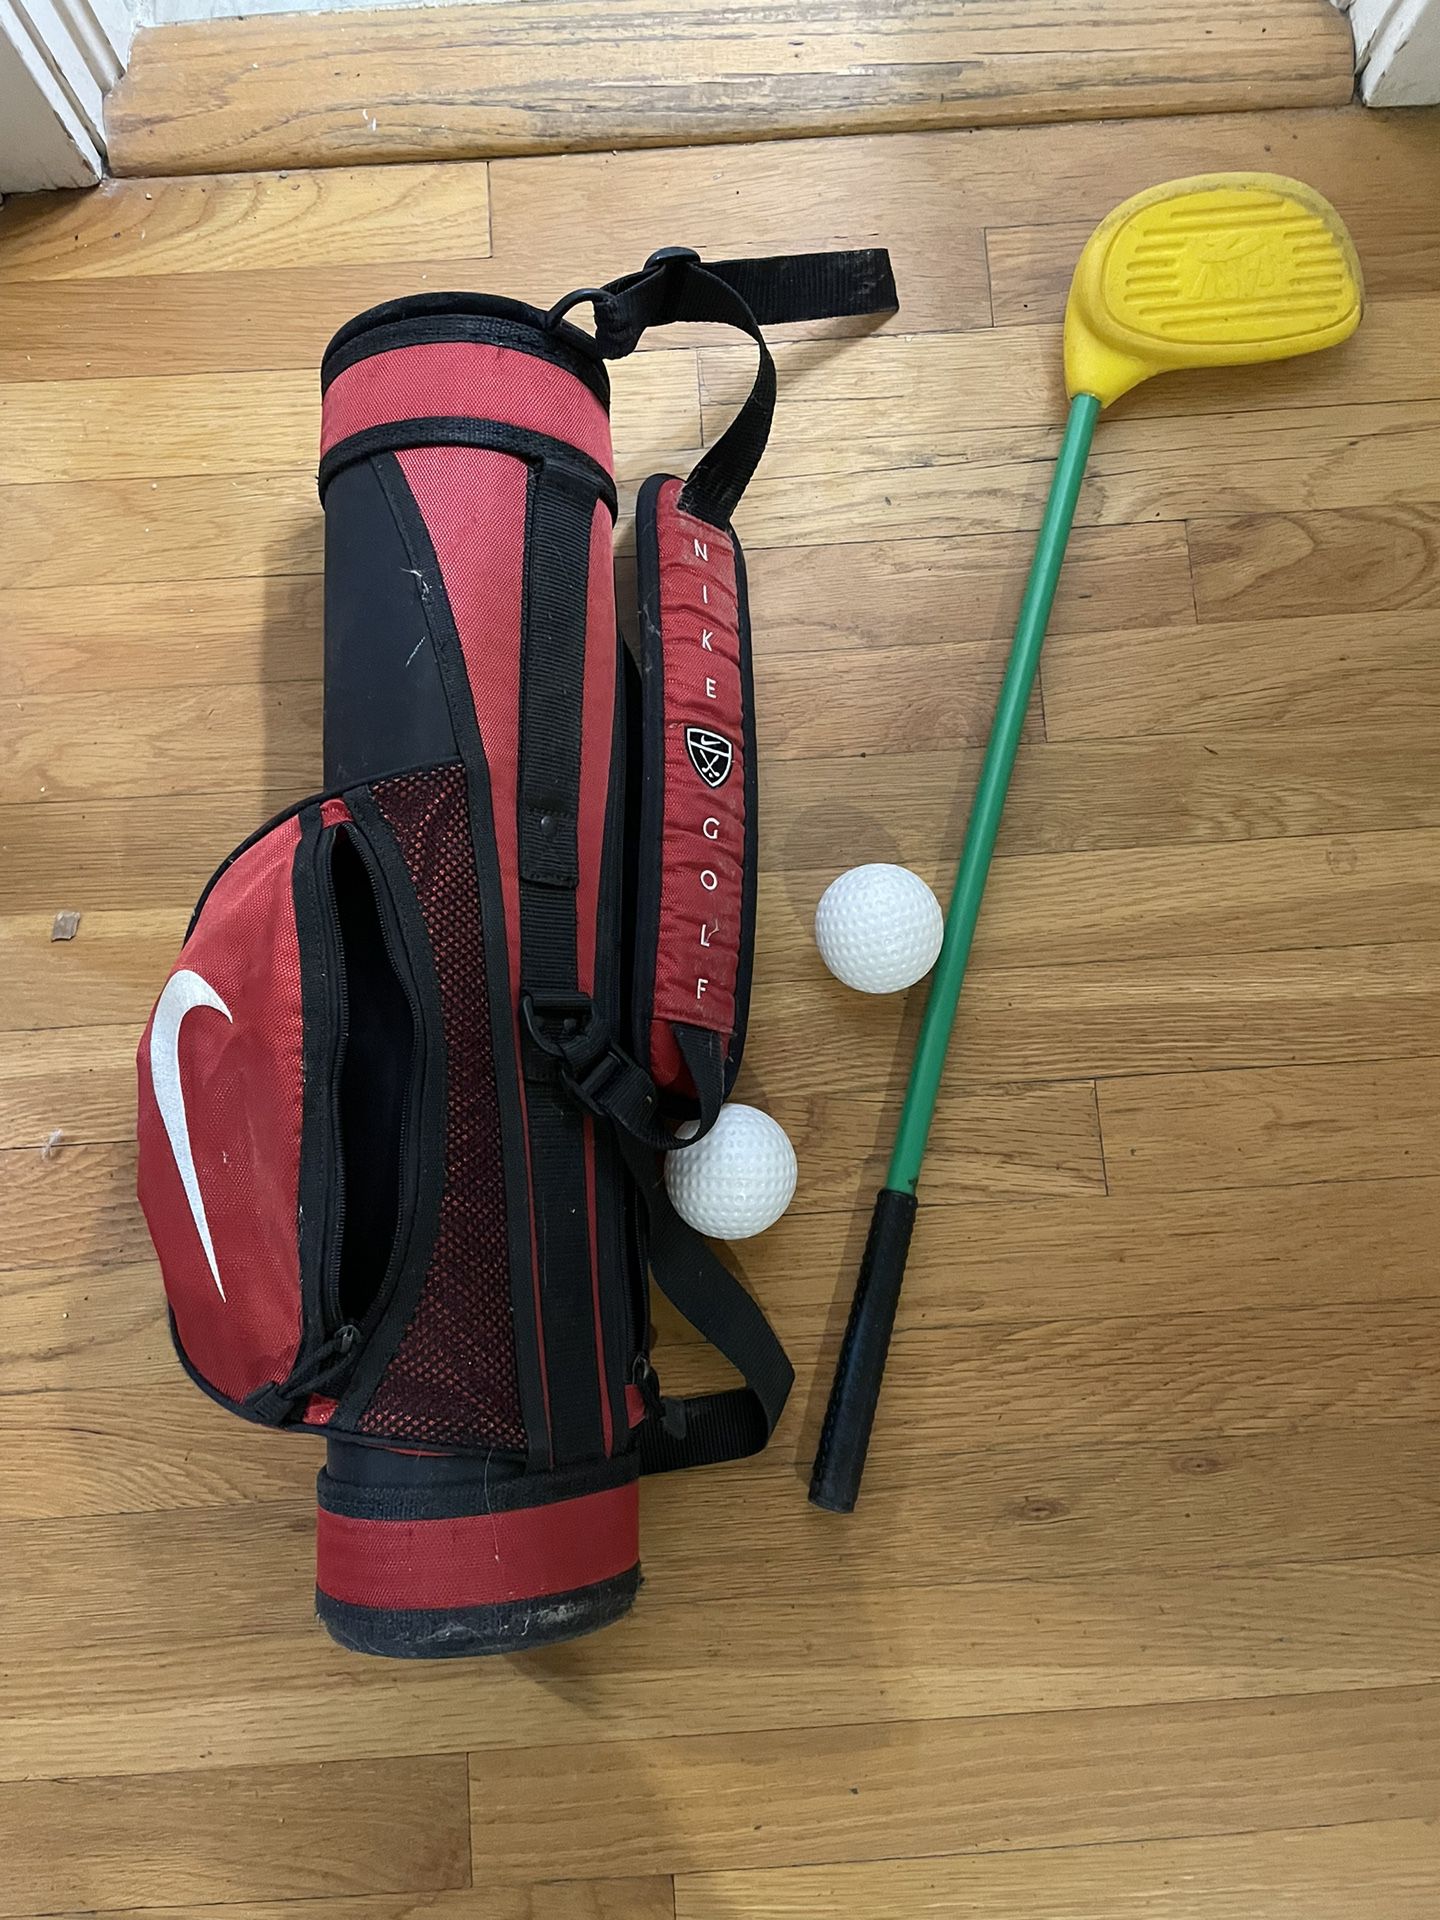 Kids Foam Golf Set With Nike Bag